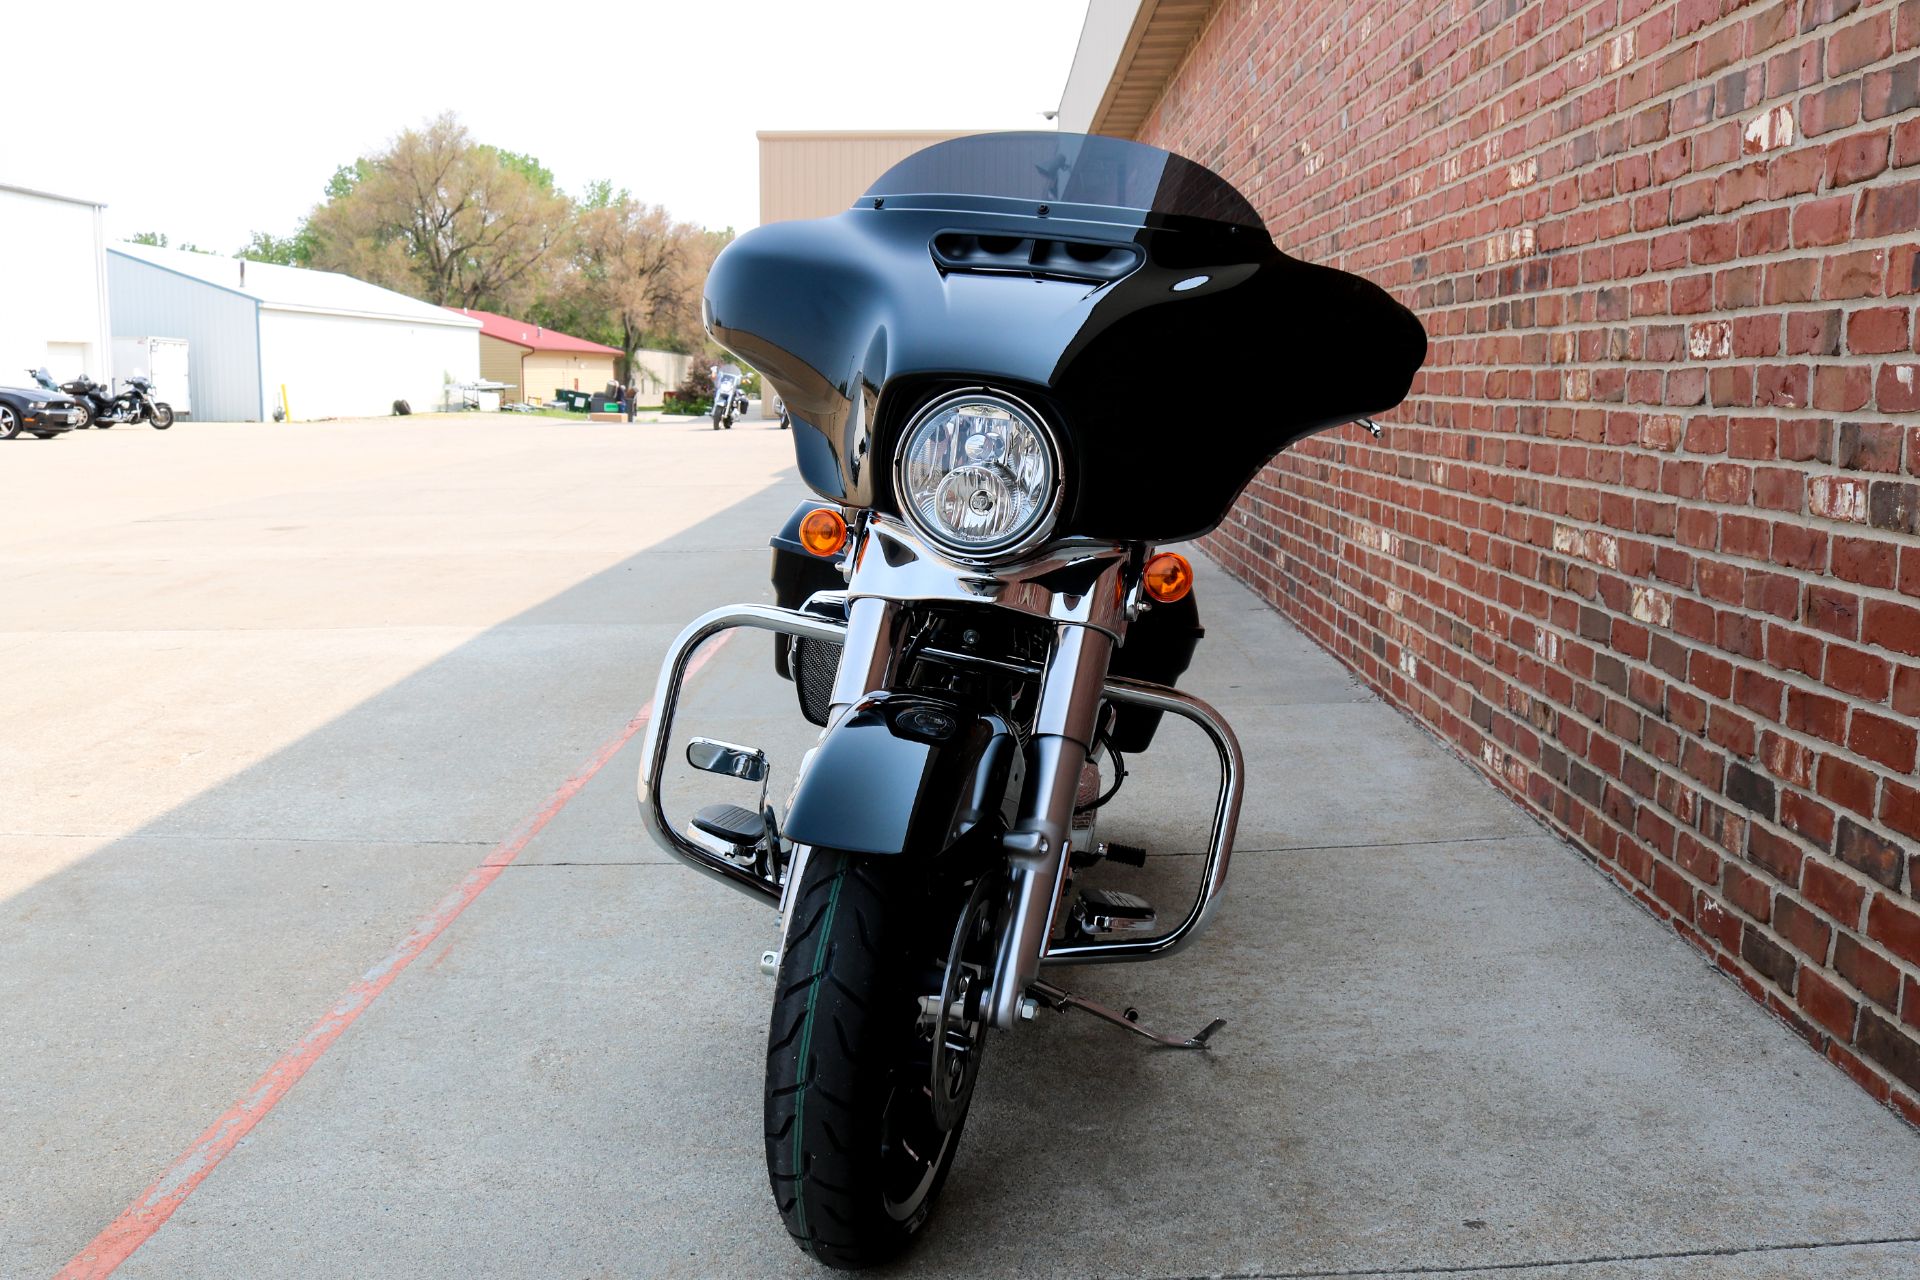 2023 Harley-Davidson Street Glide® in Ames, Iowa - Photo 6